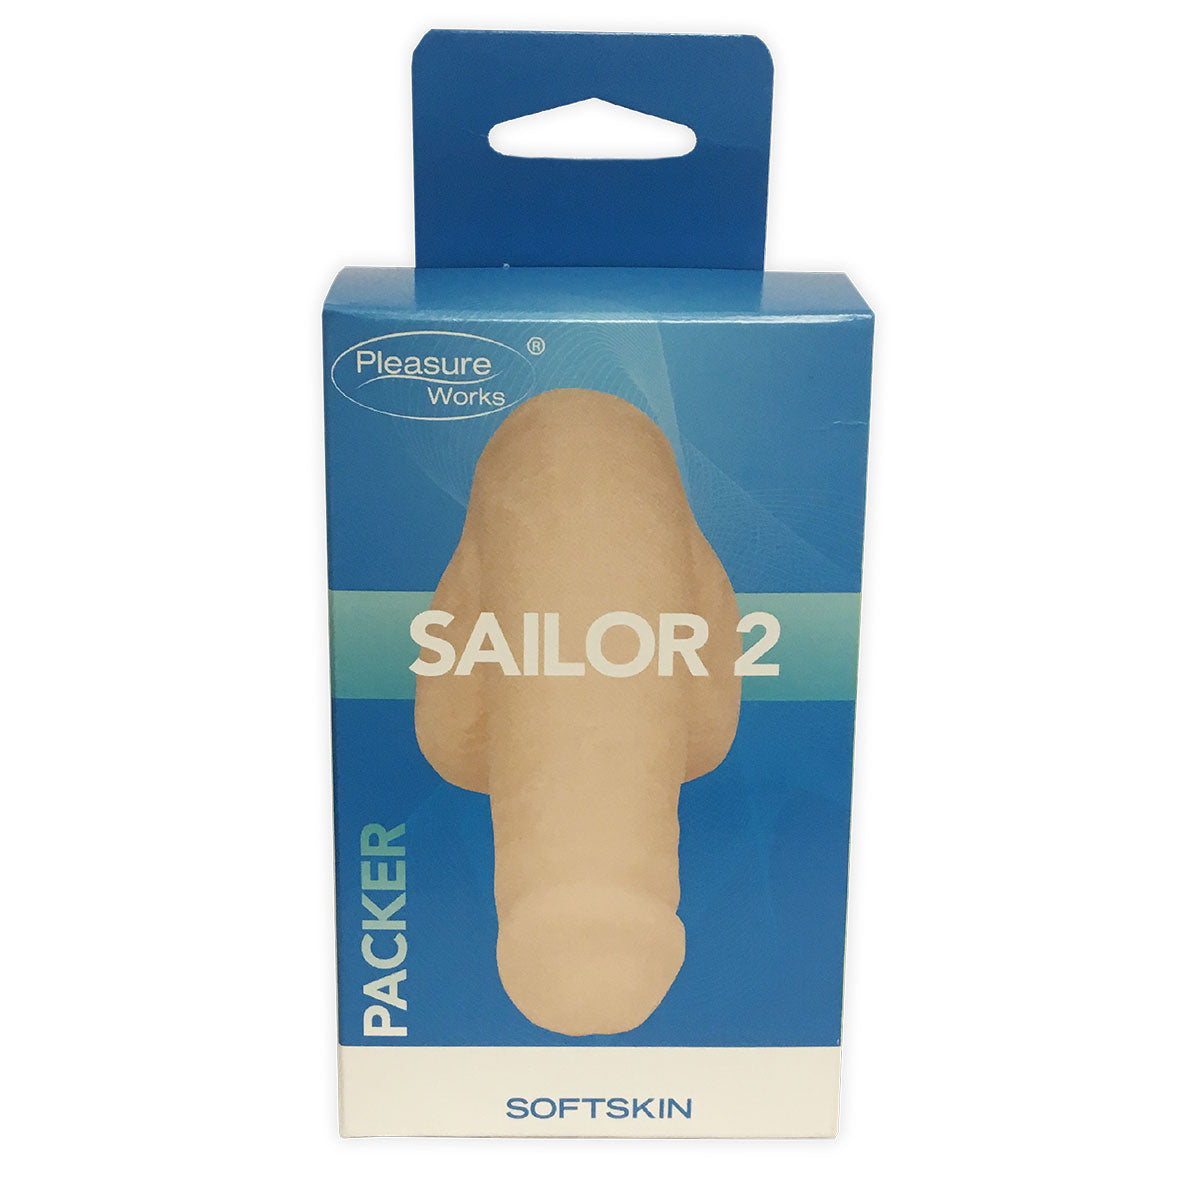 Sailor 2 Vanilla Packer Intimates Adult Boutique